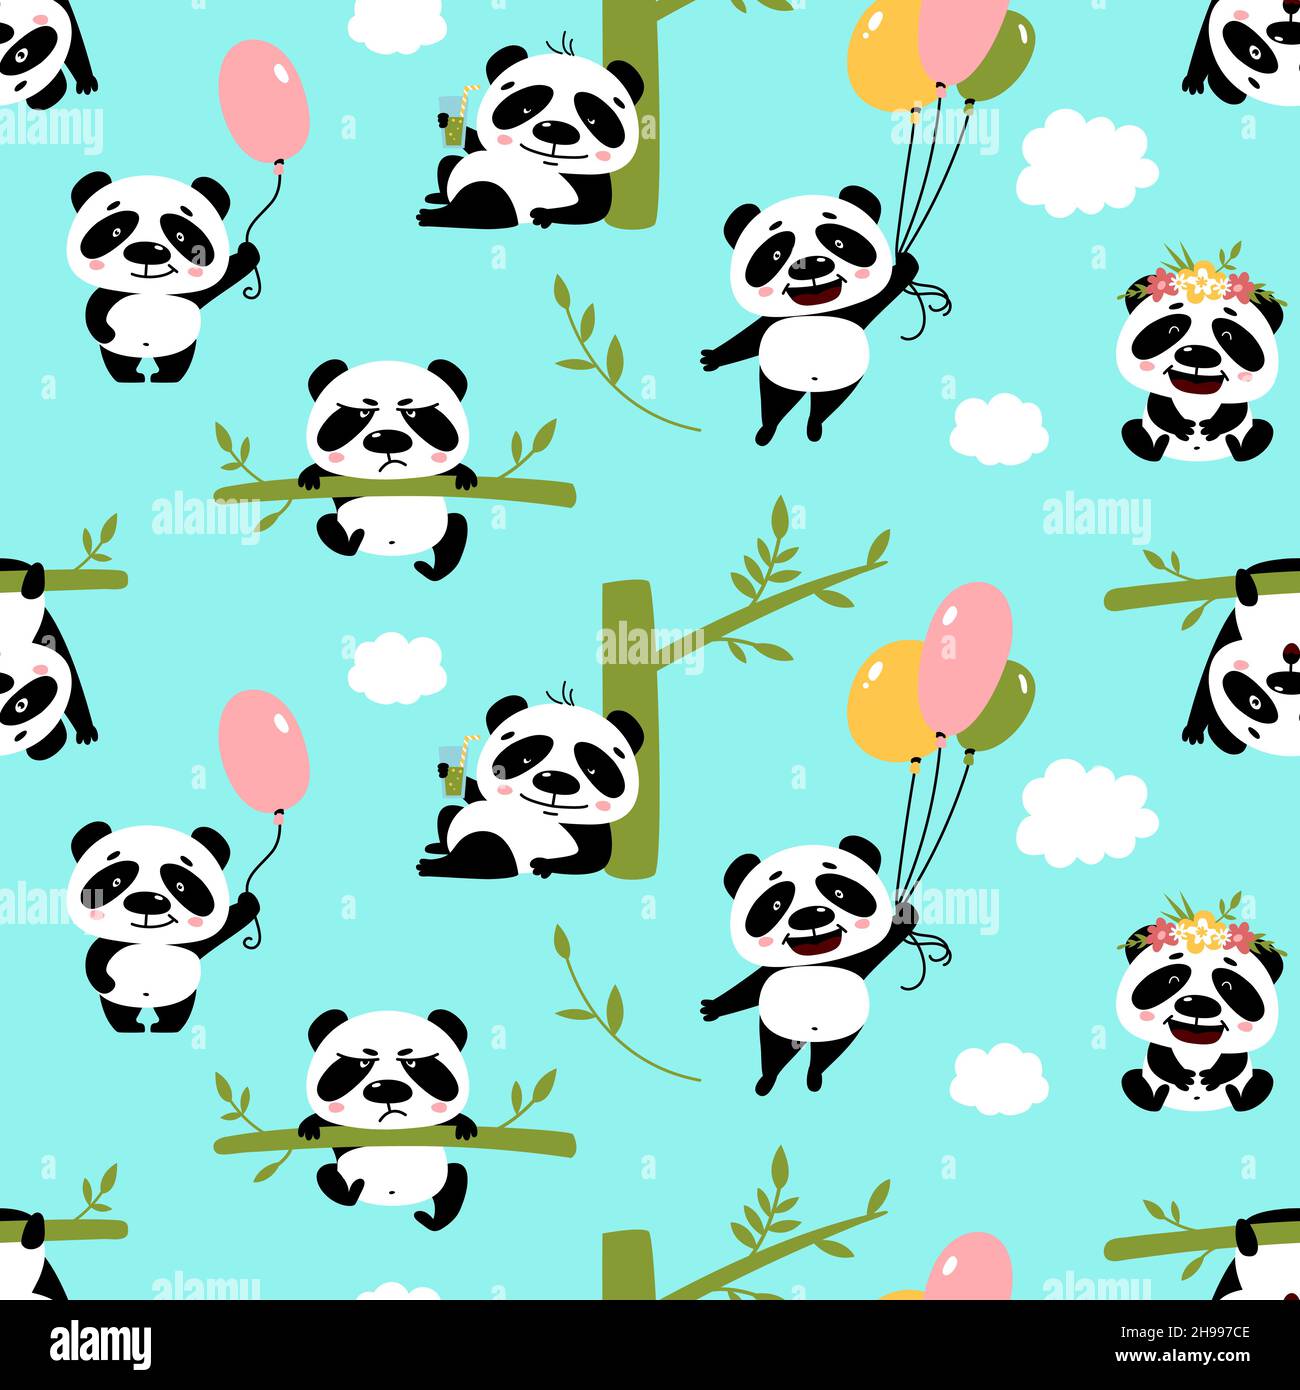 Cute panda seamless pattern kawaii pandas background abstract kid wallpaper asia bear with bamboo animal childish design classy vector print stock vector image art